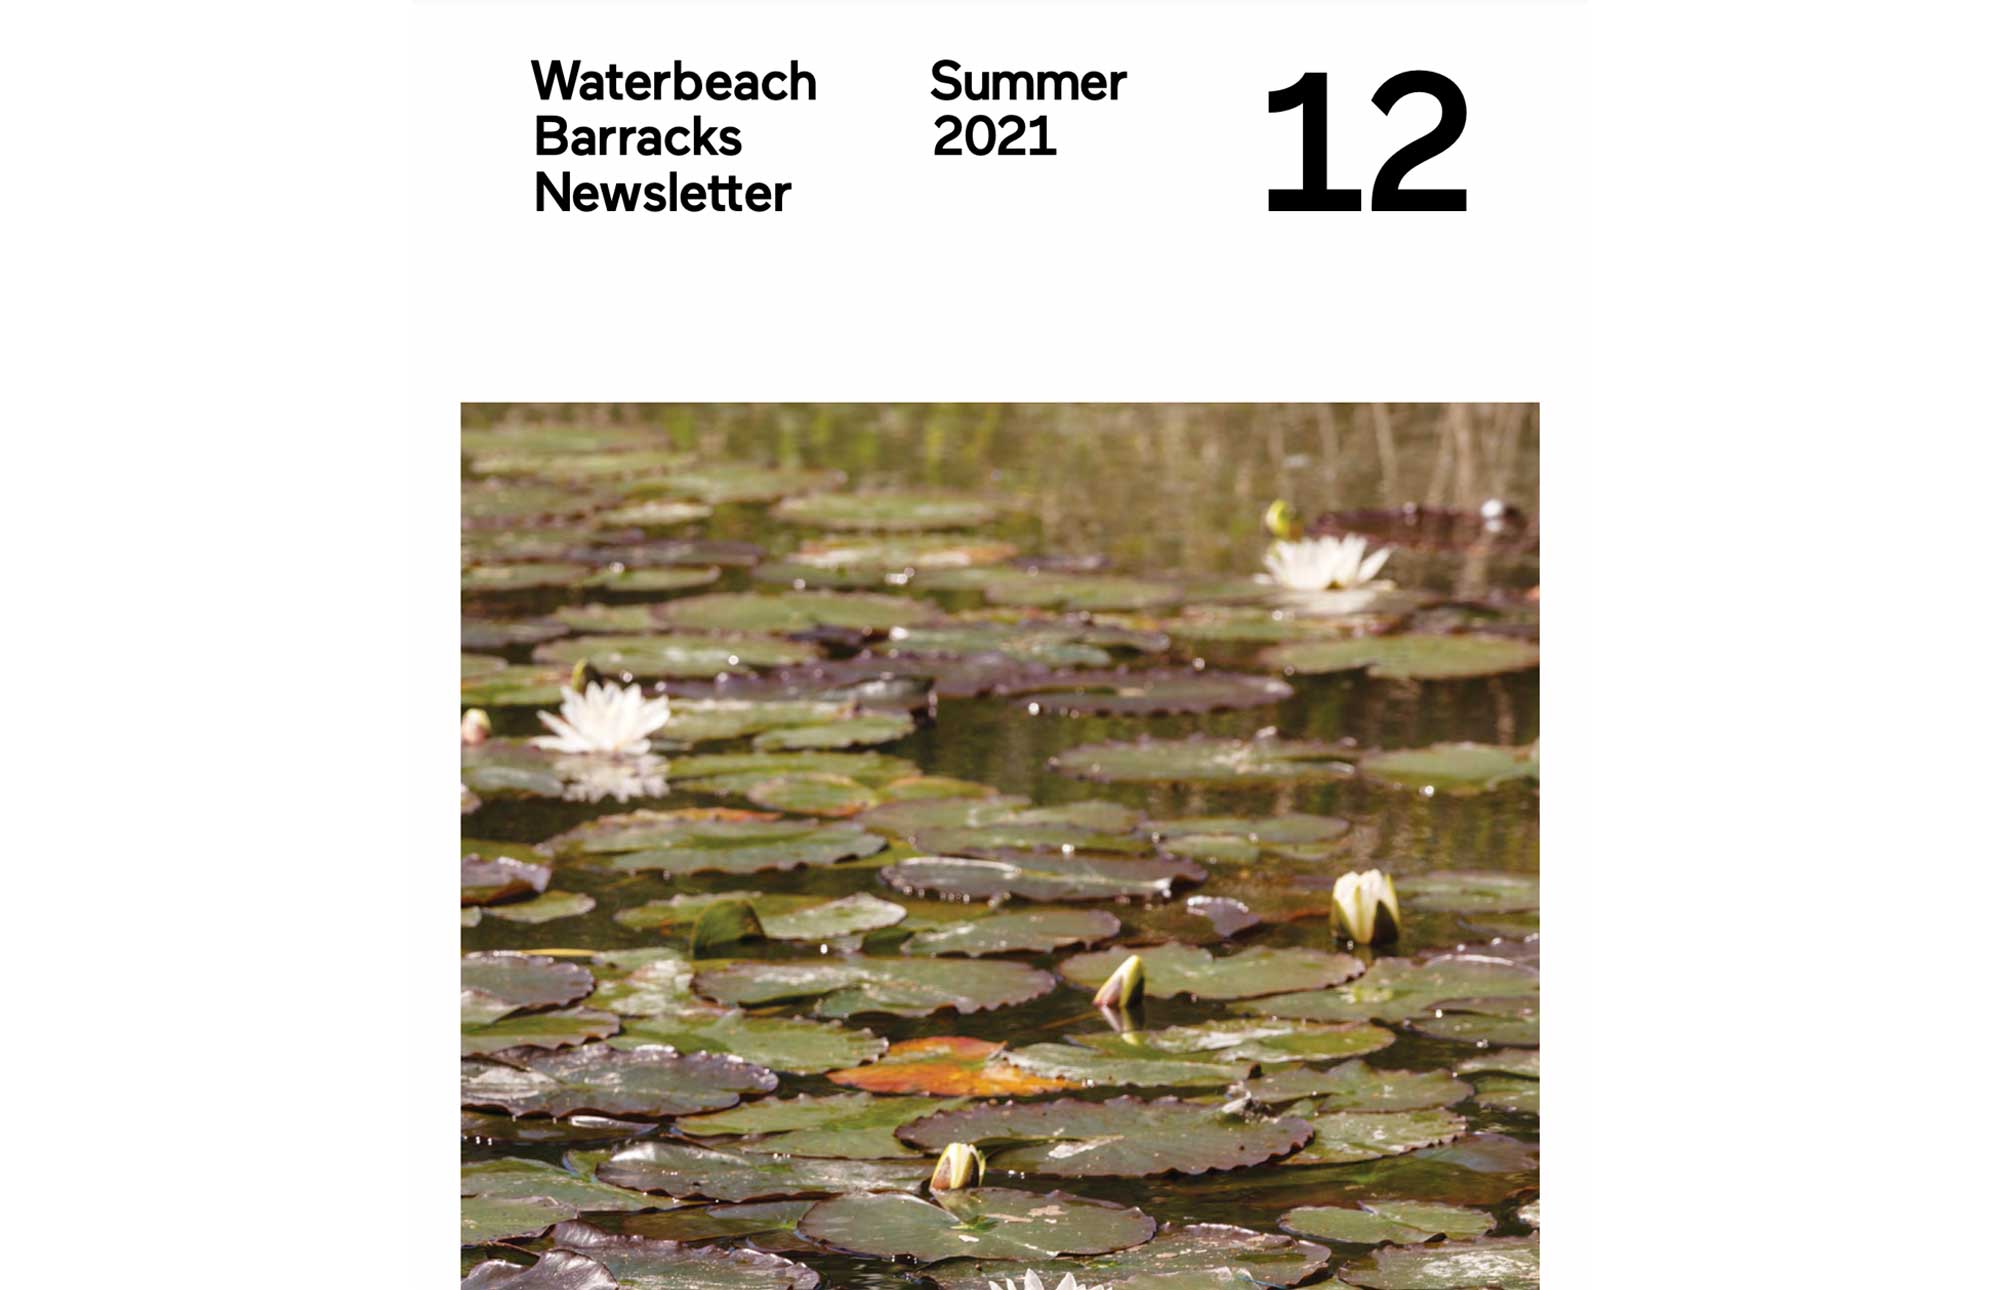 Featured image for “Waterbeach Barracks Newsletter Summer 2021”